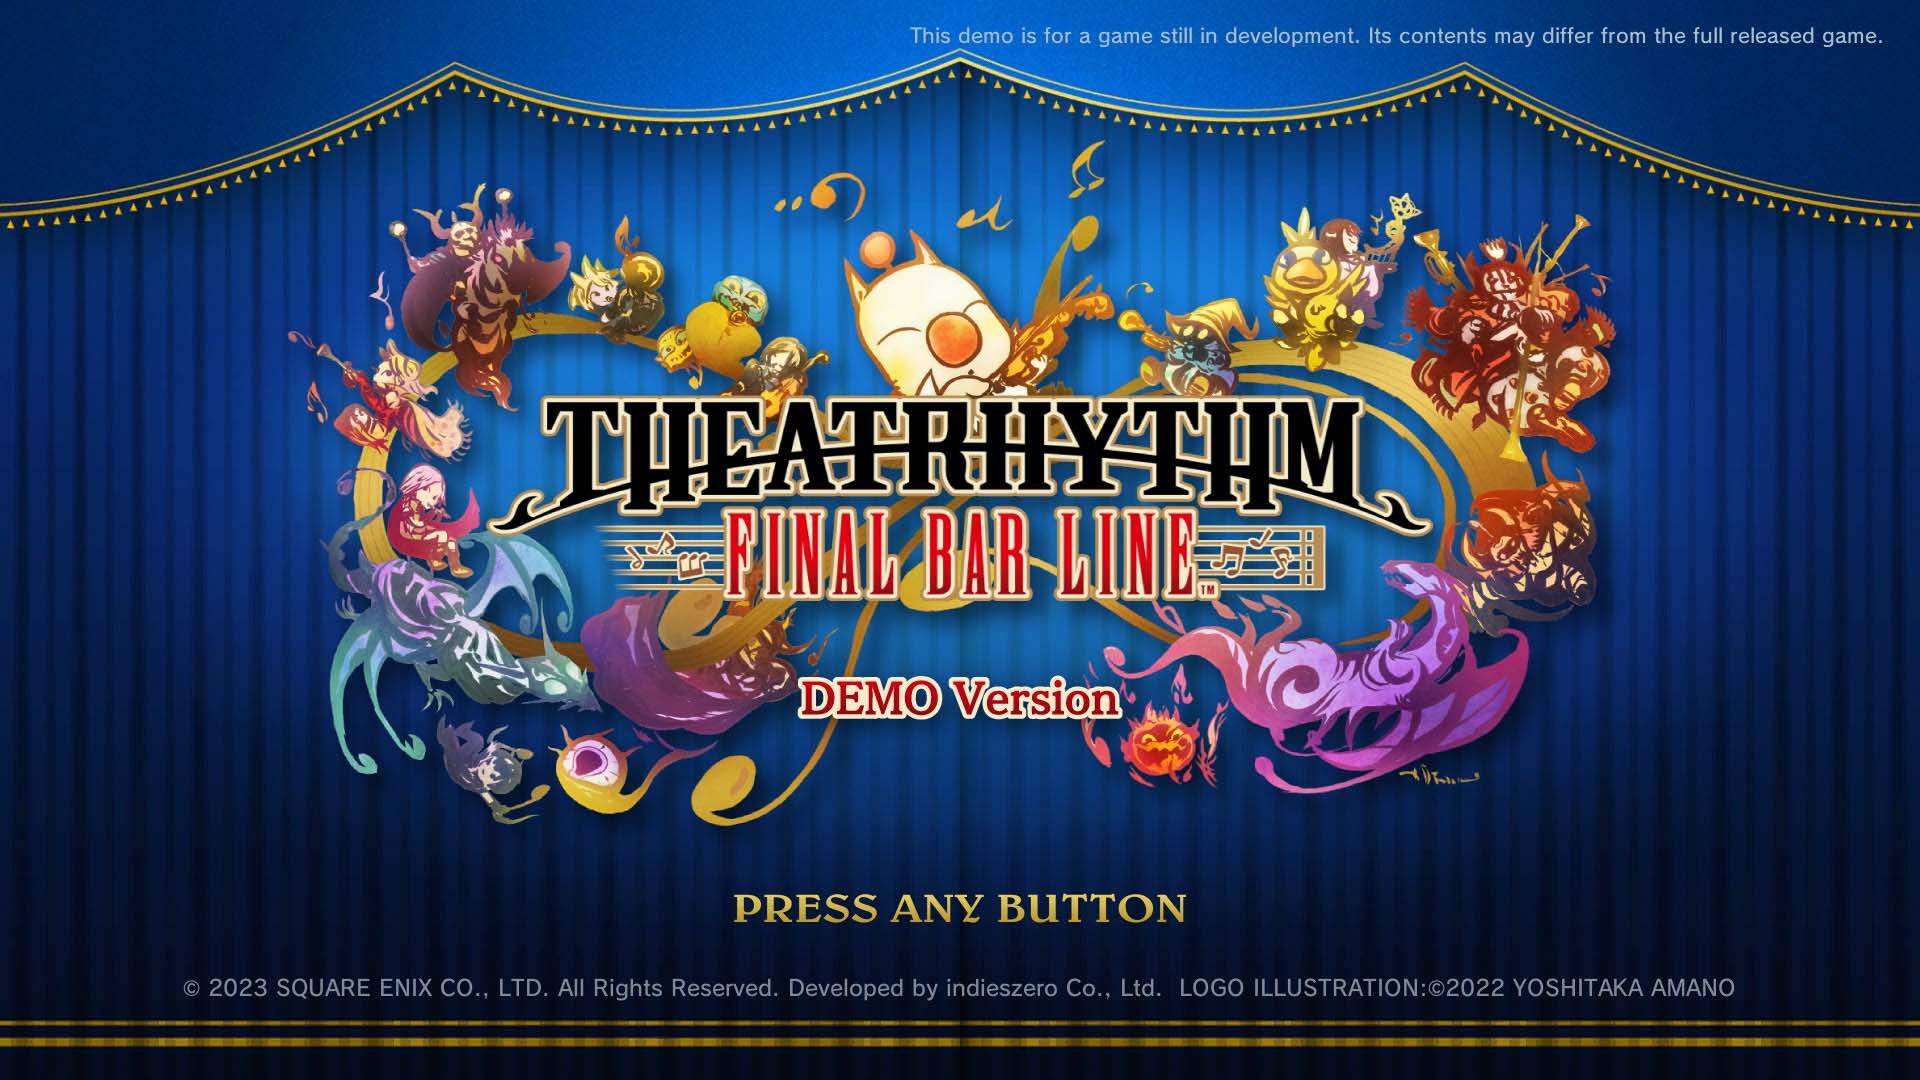 Theatrhythm Final Bar Line - Nintendo Switch